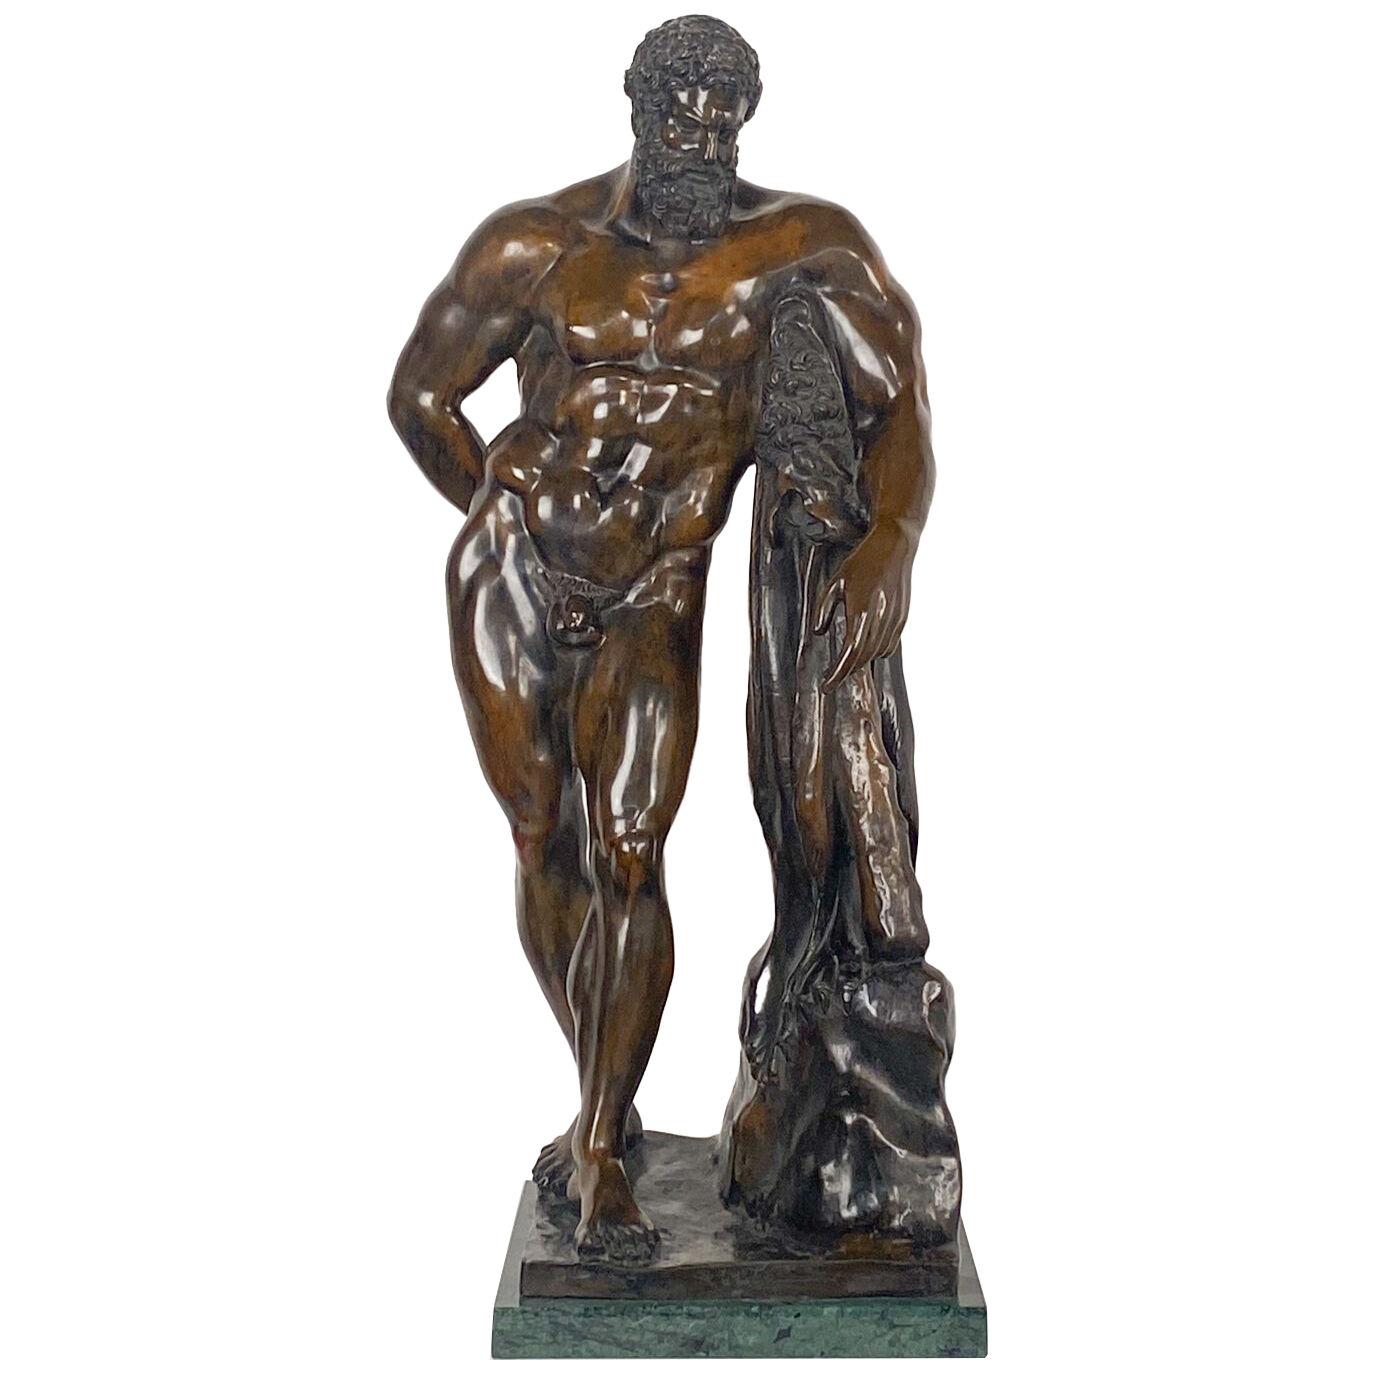 "Farnese Hercules", Italy circa 19th century